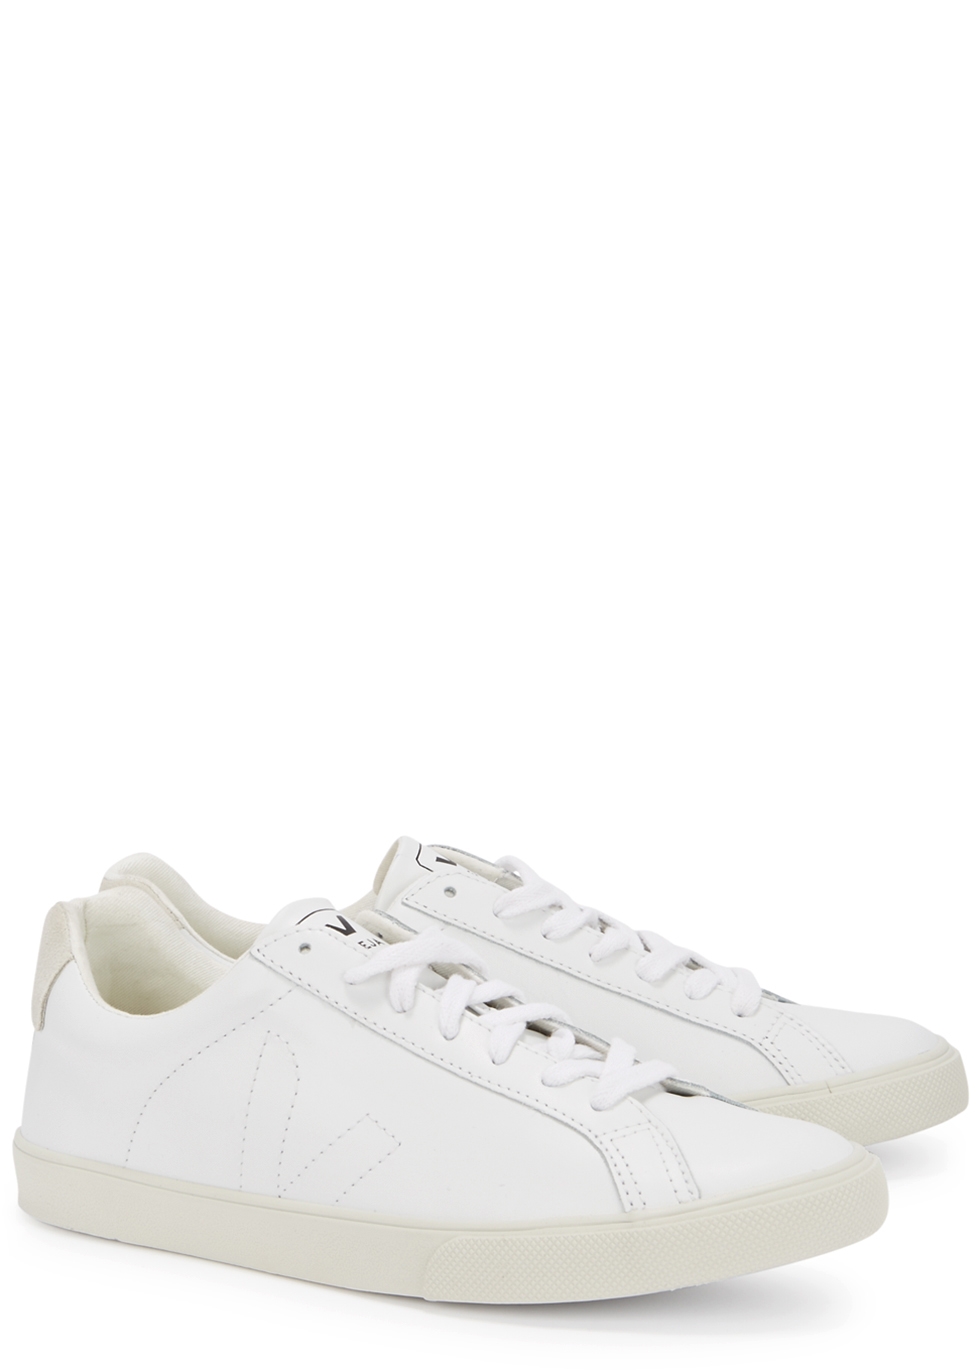 Veja Esplar white leather sneakers 